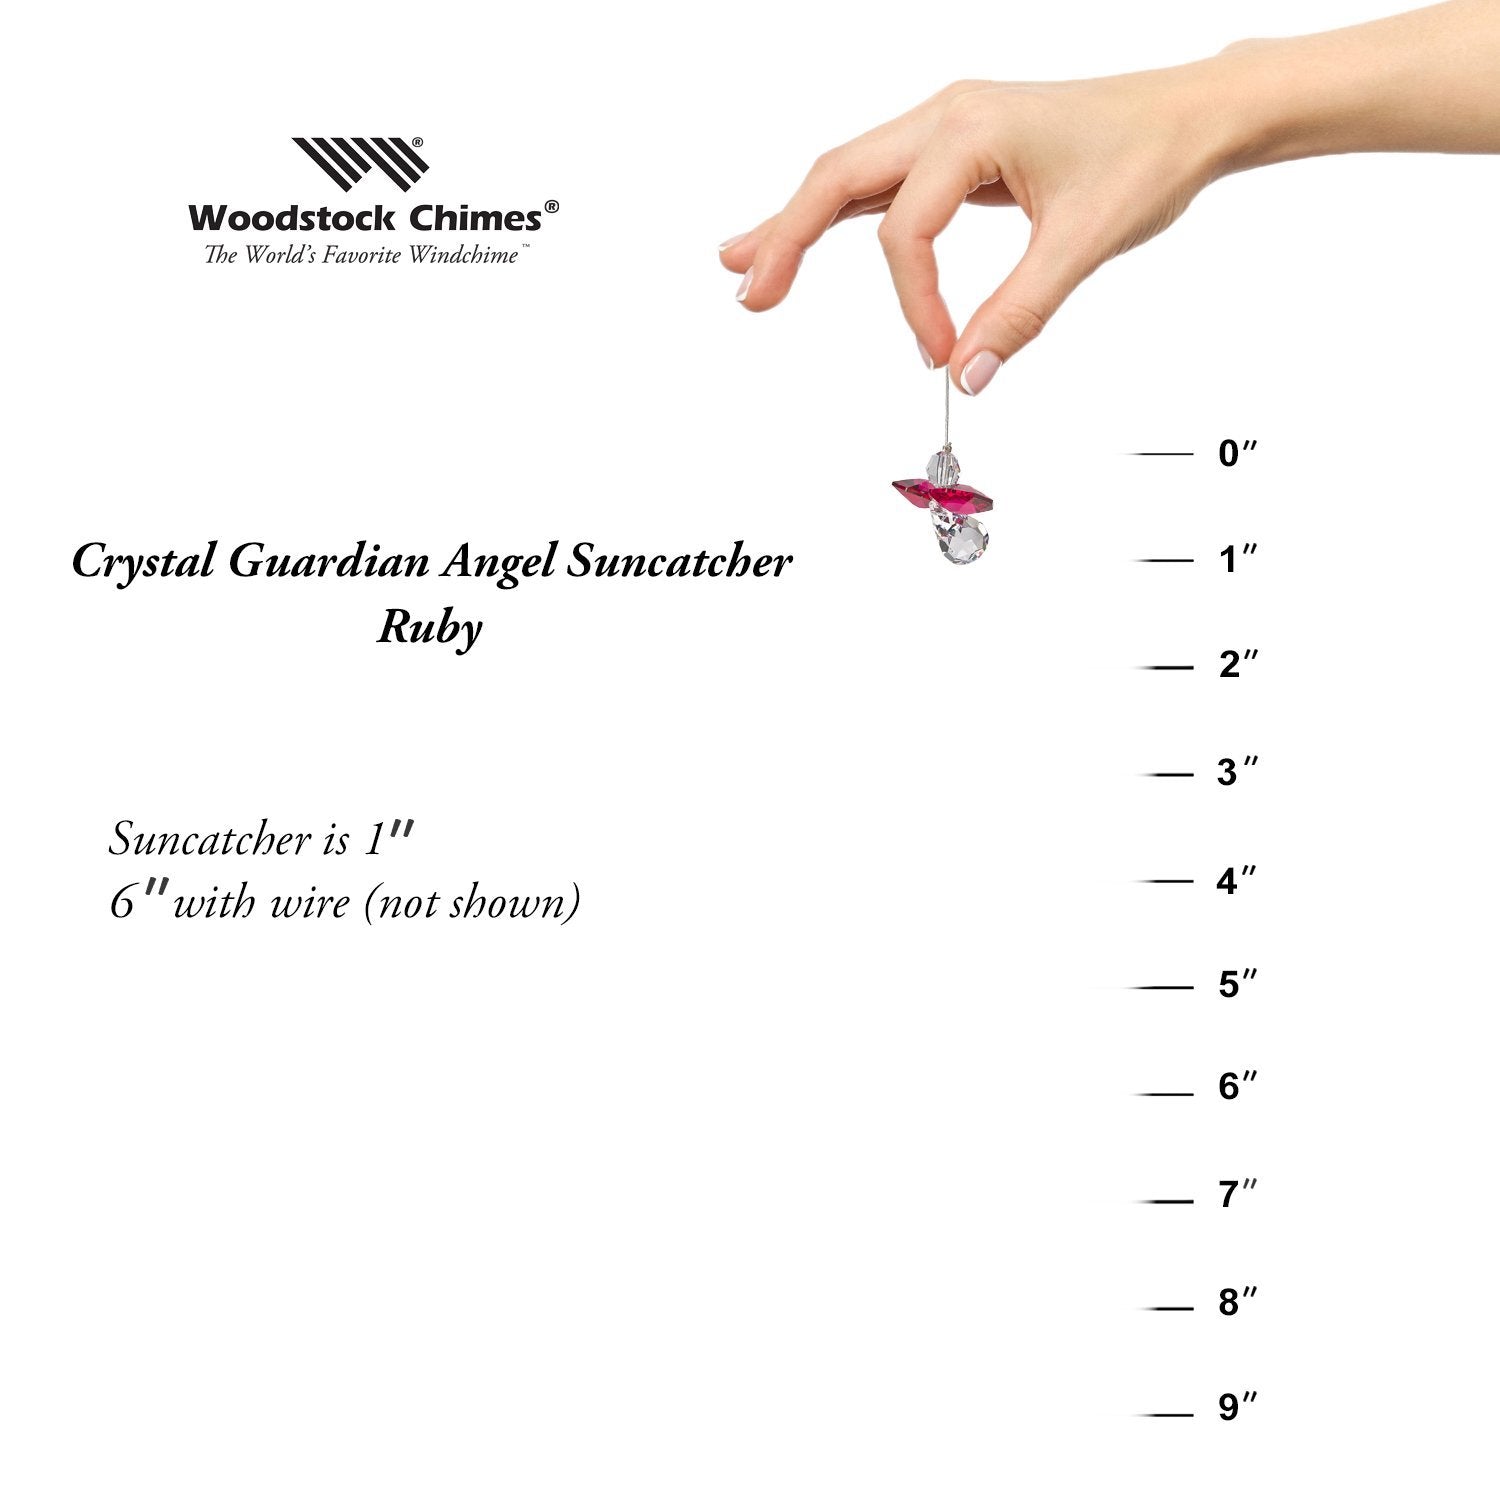 Crystal Guardian Angel Suncatcher - Ruby (July) proportion image